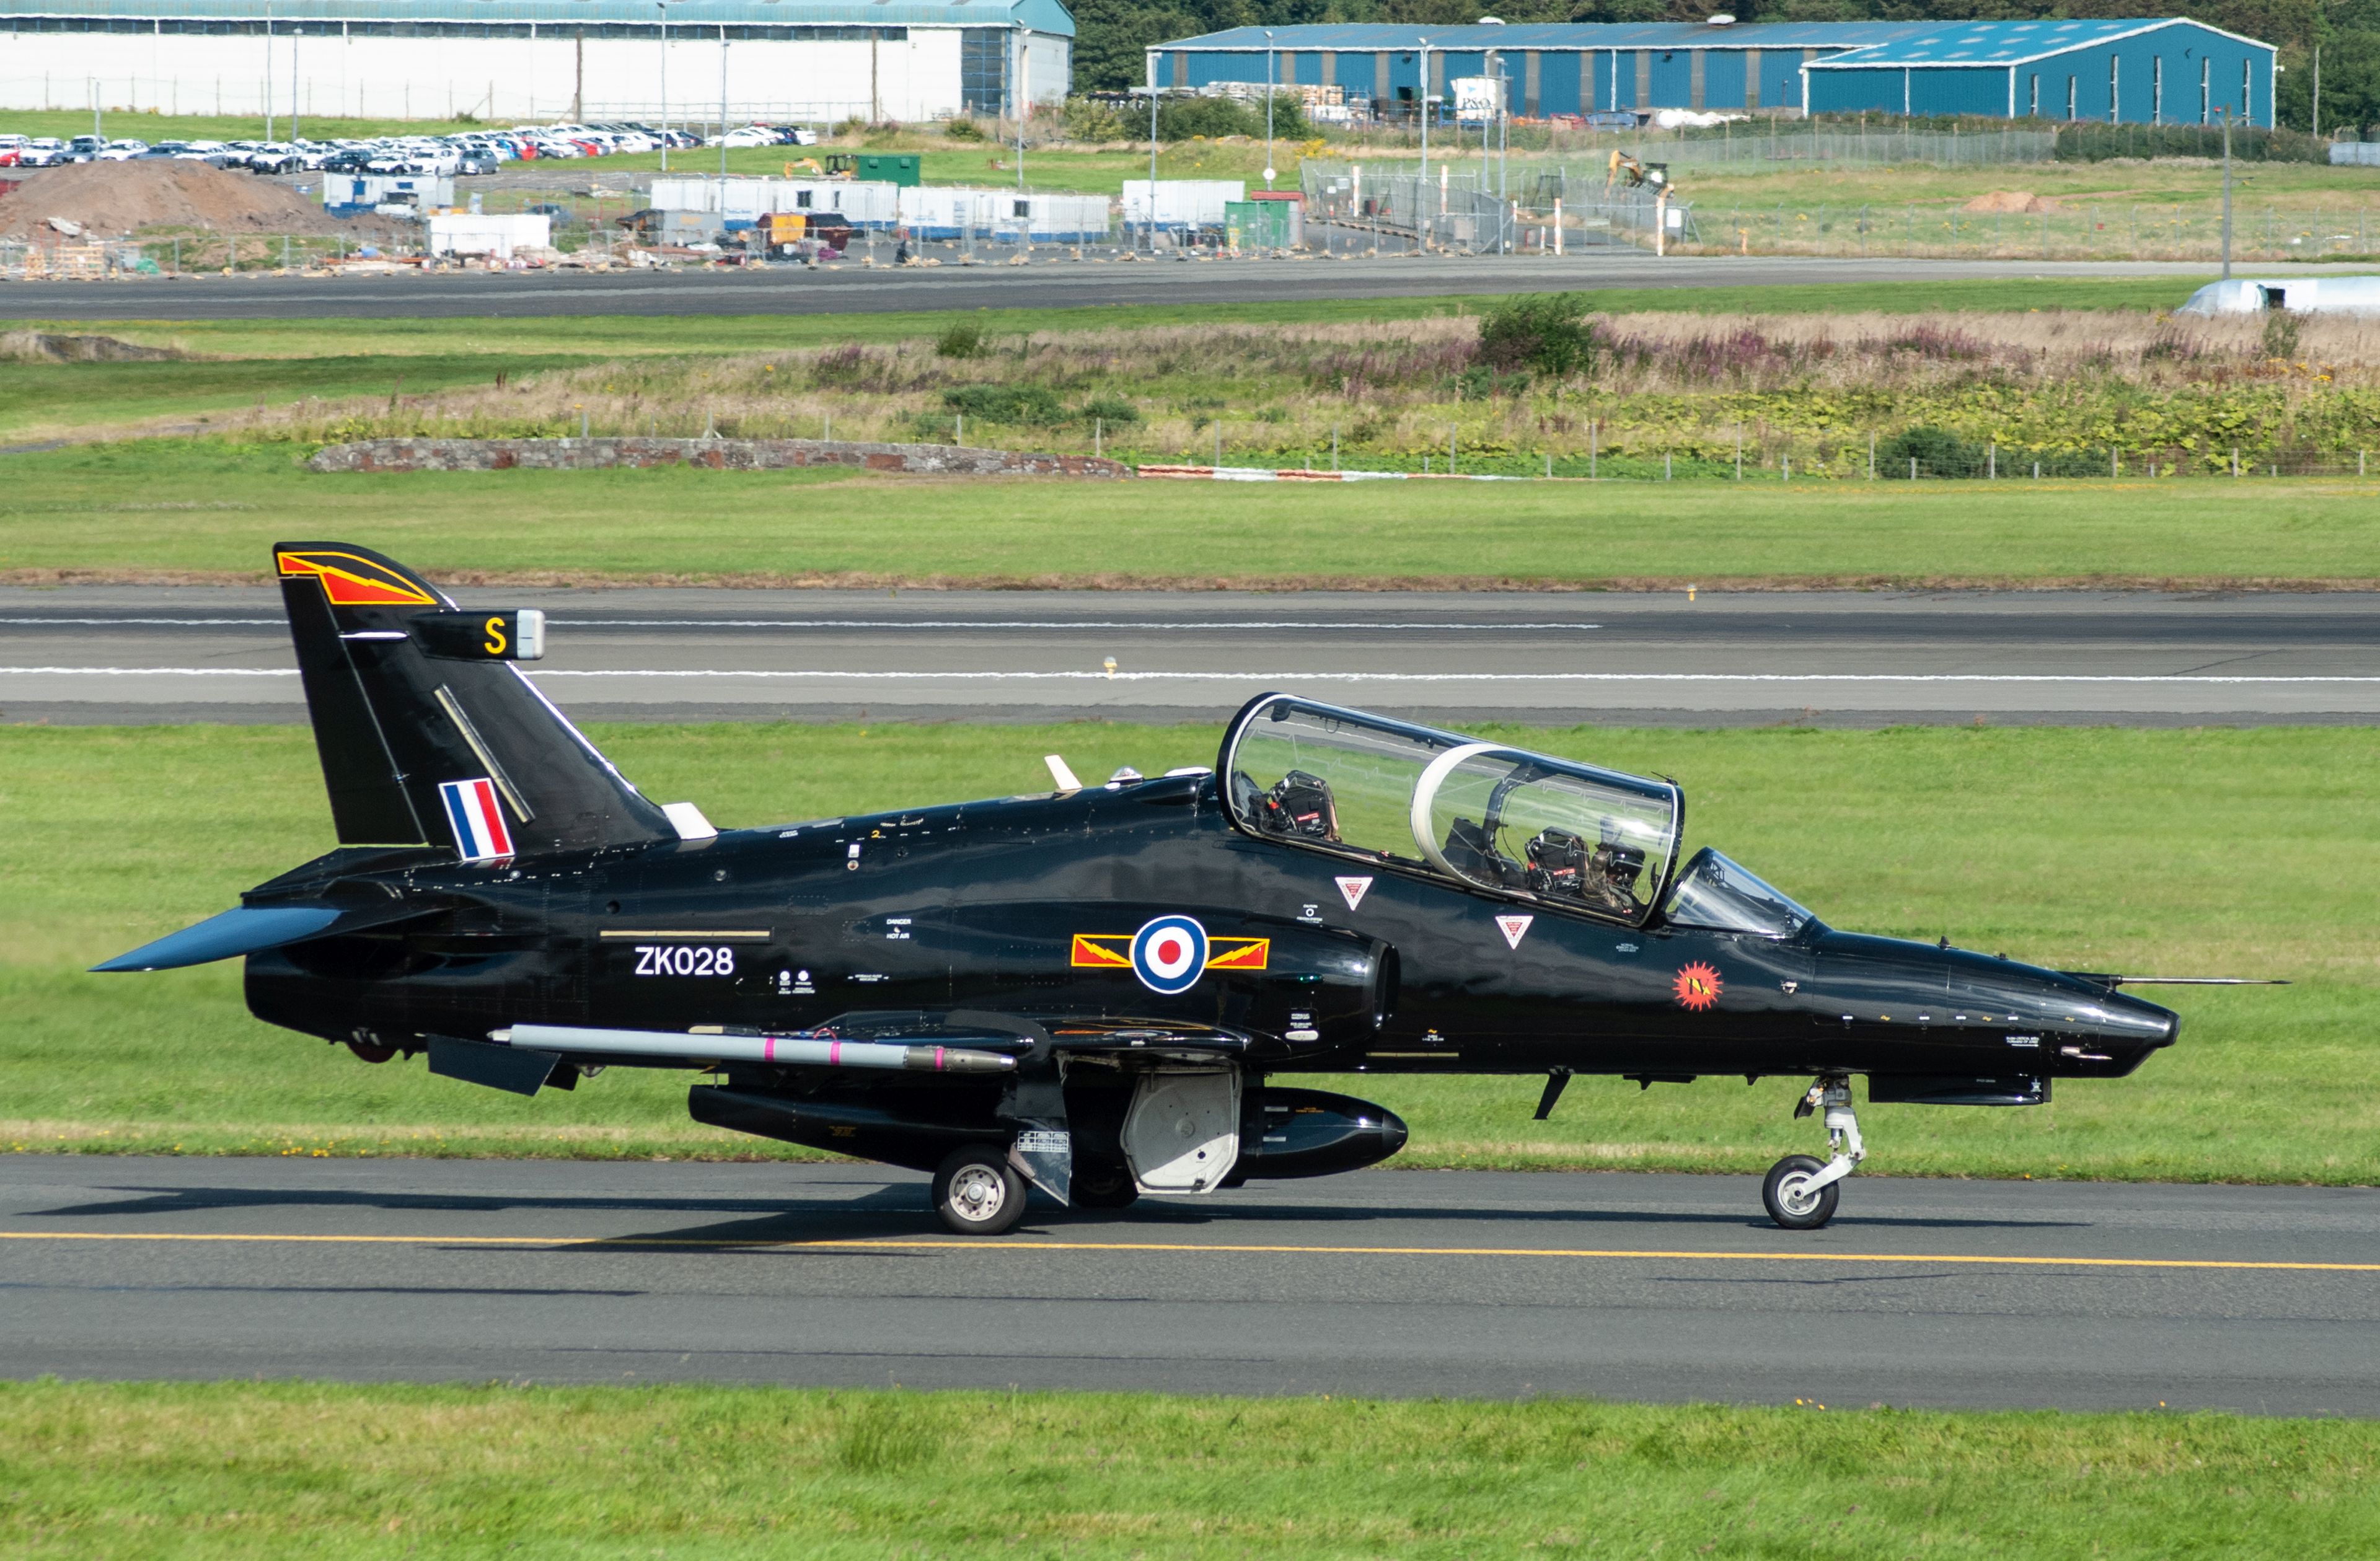 ZK028/ZK028 RAF - Royal Air Force British Aerospace Hawk Airframe Information - AVSpotters.com